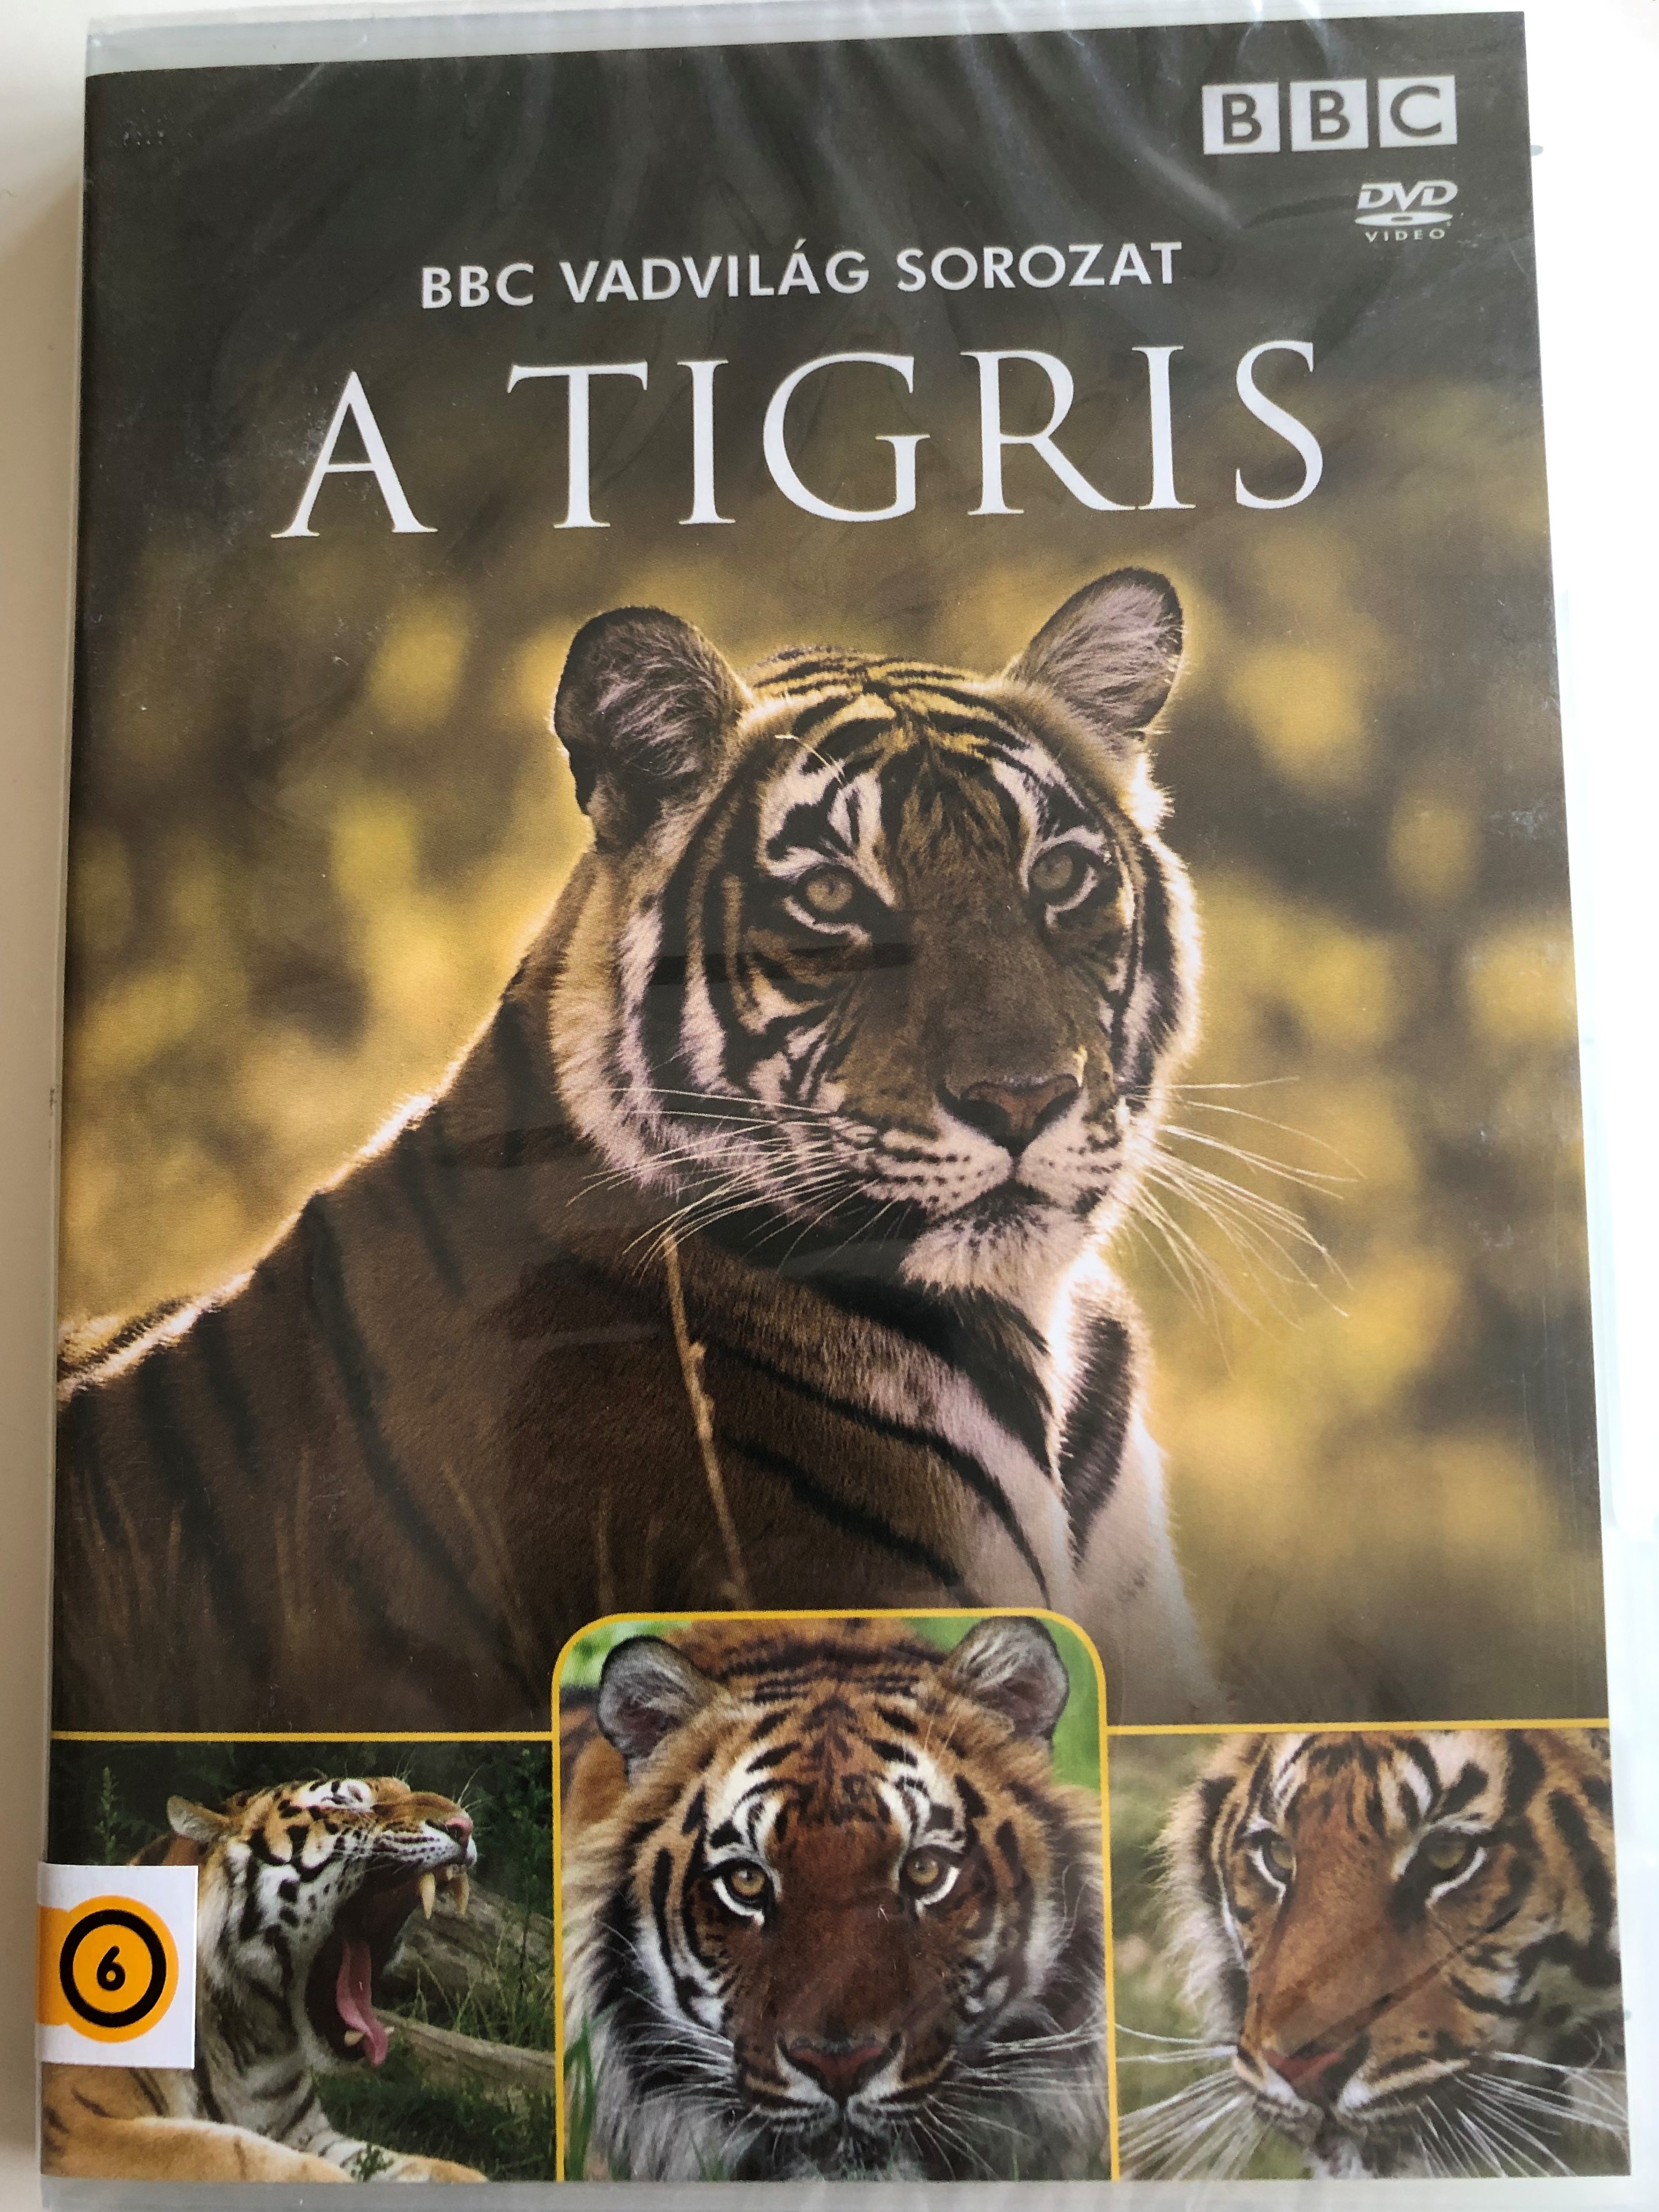 -a-tigris-tiger-the-elusive-princess-bbc-wildlife-series-narrated-by-sir-david-attenborough-dvd-1999-bbc-vadvil-g-sorozat-1-.jpg